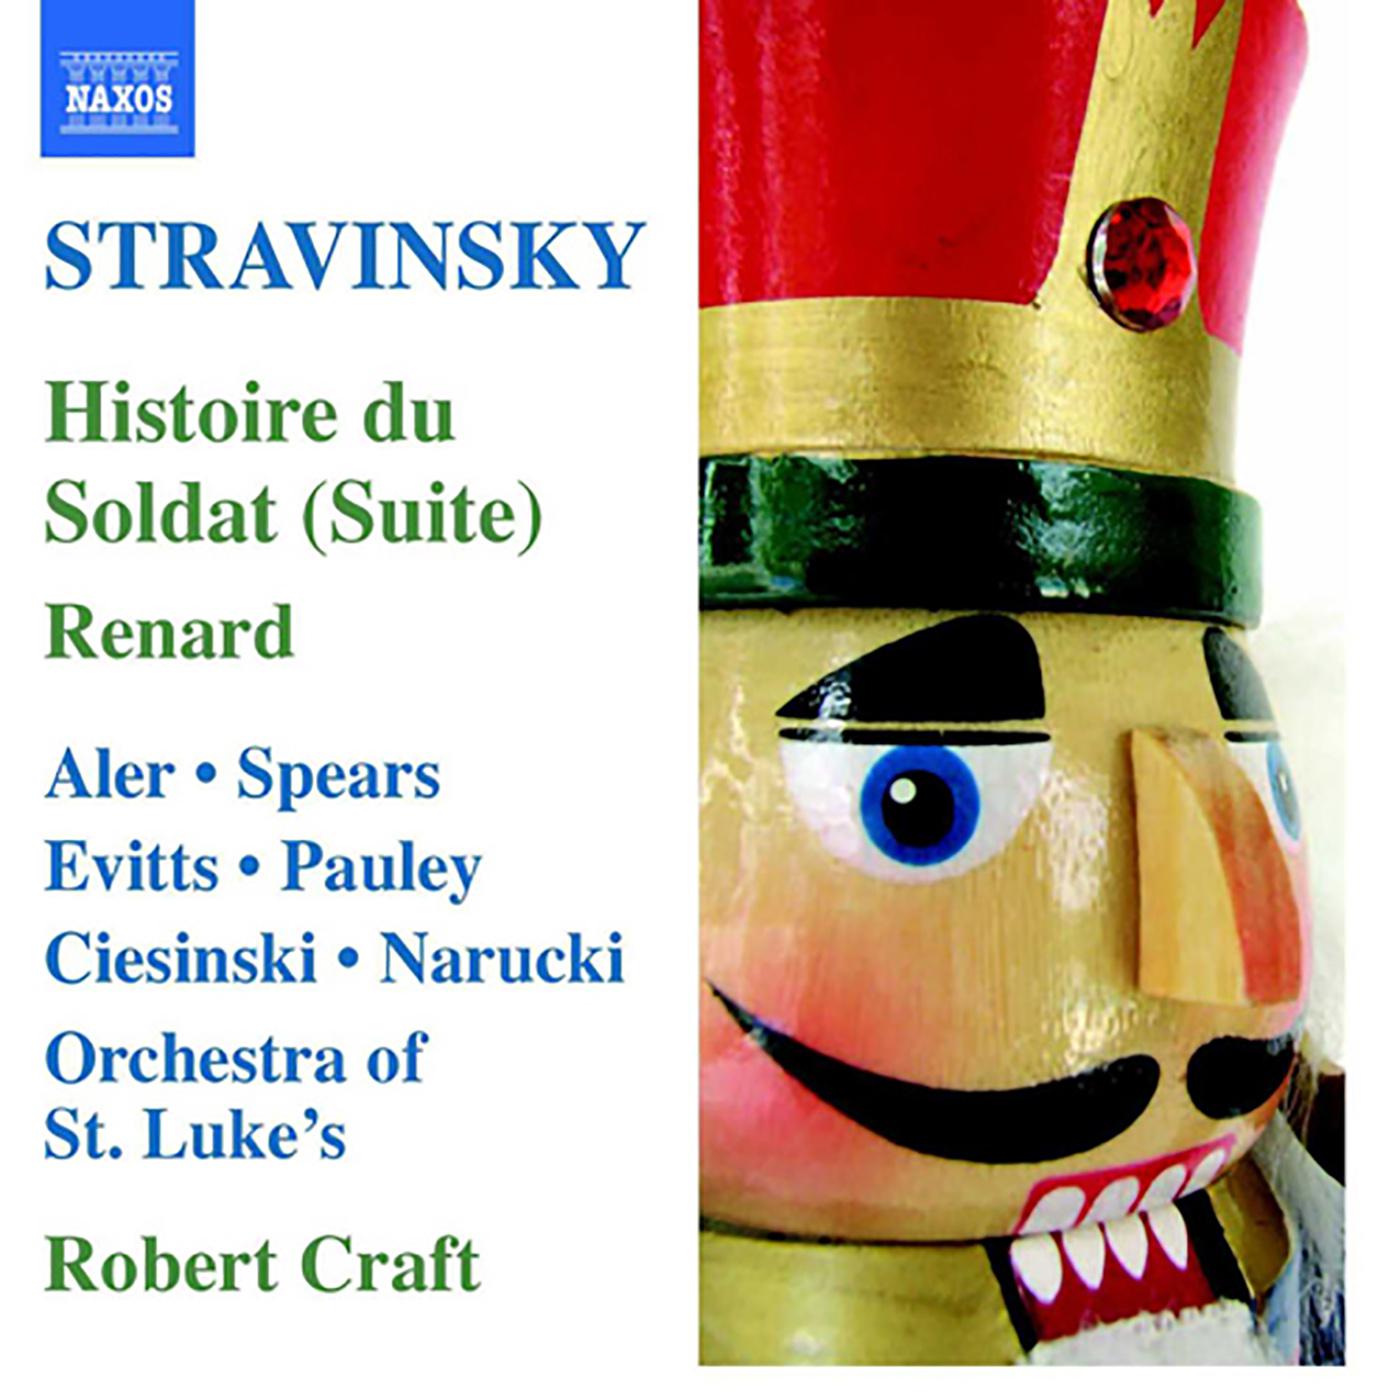 STRAVINSKY, I.: Histoire du Soldat Suite / Renard (Craft) (Stravinsky, Vol. 7)